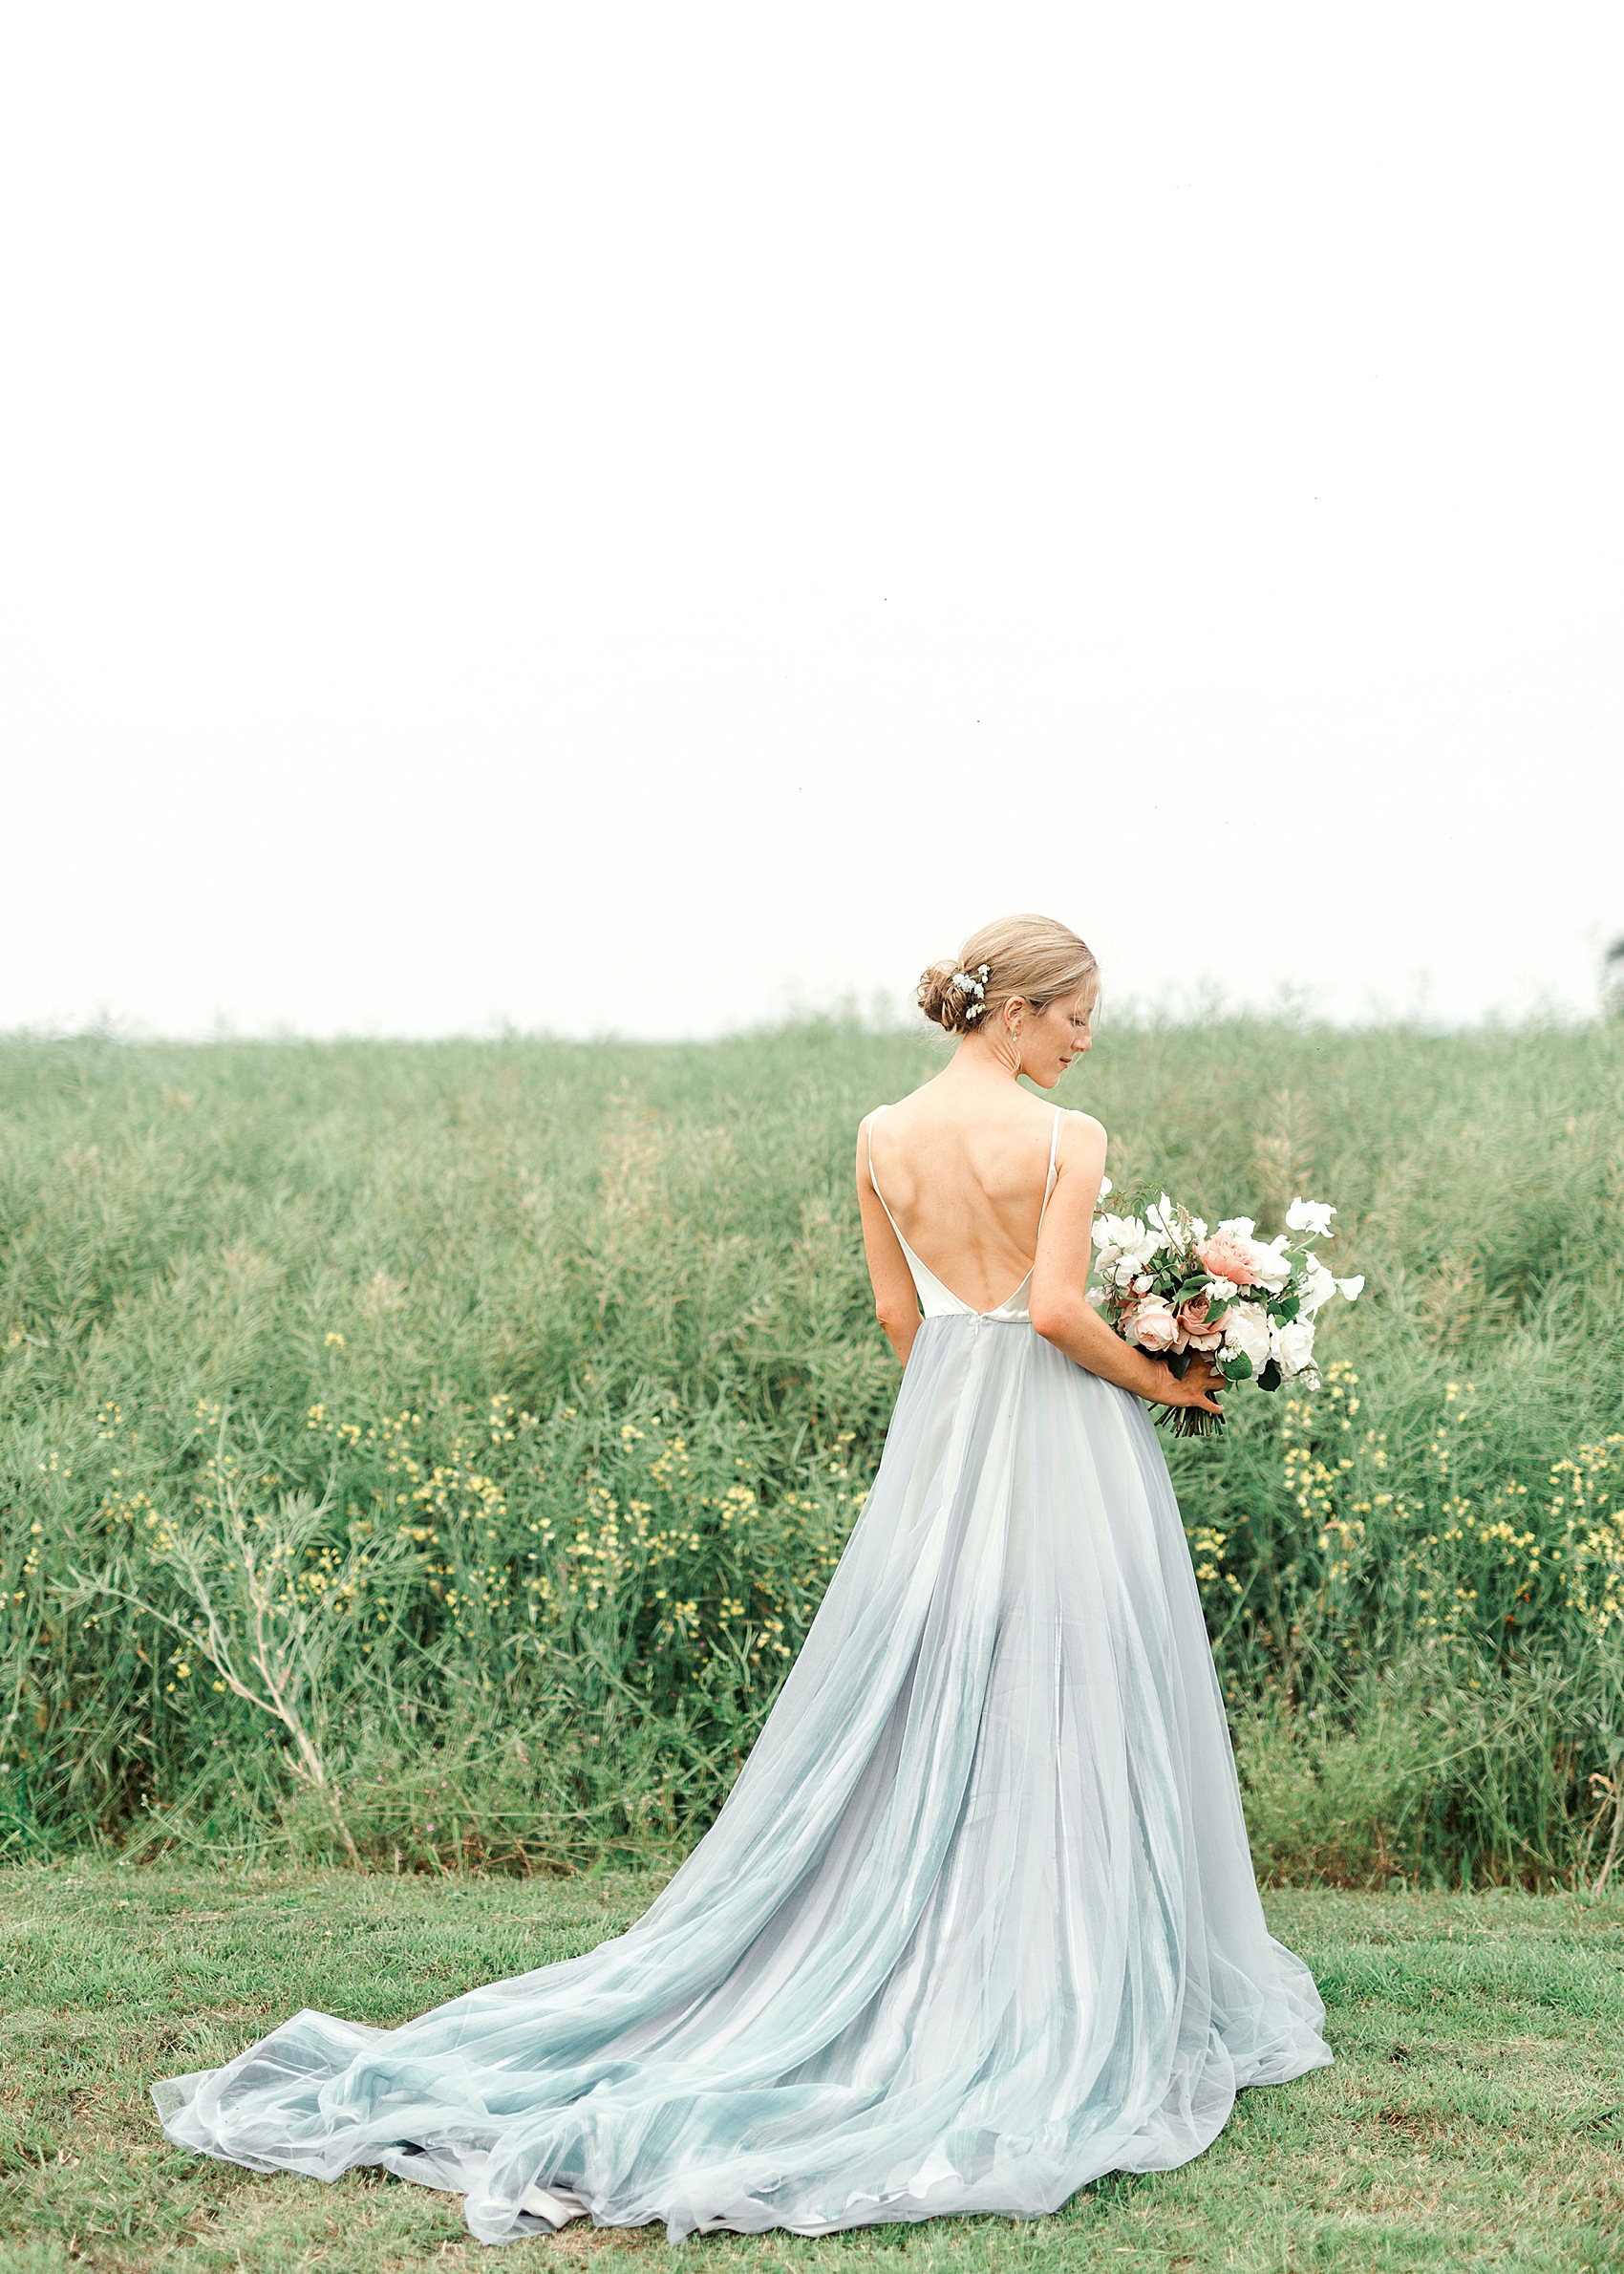 51 Blue tulle wedding dress